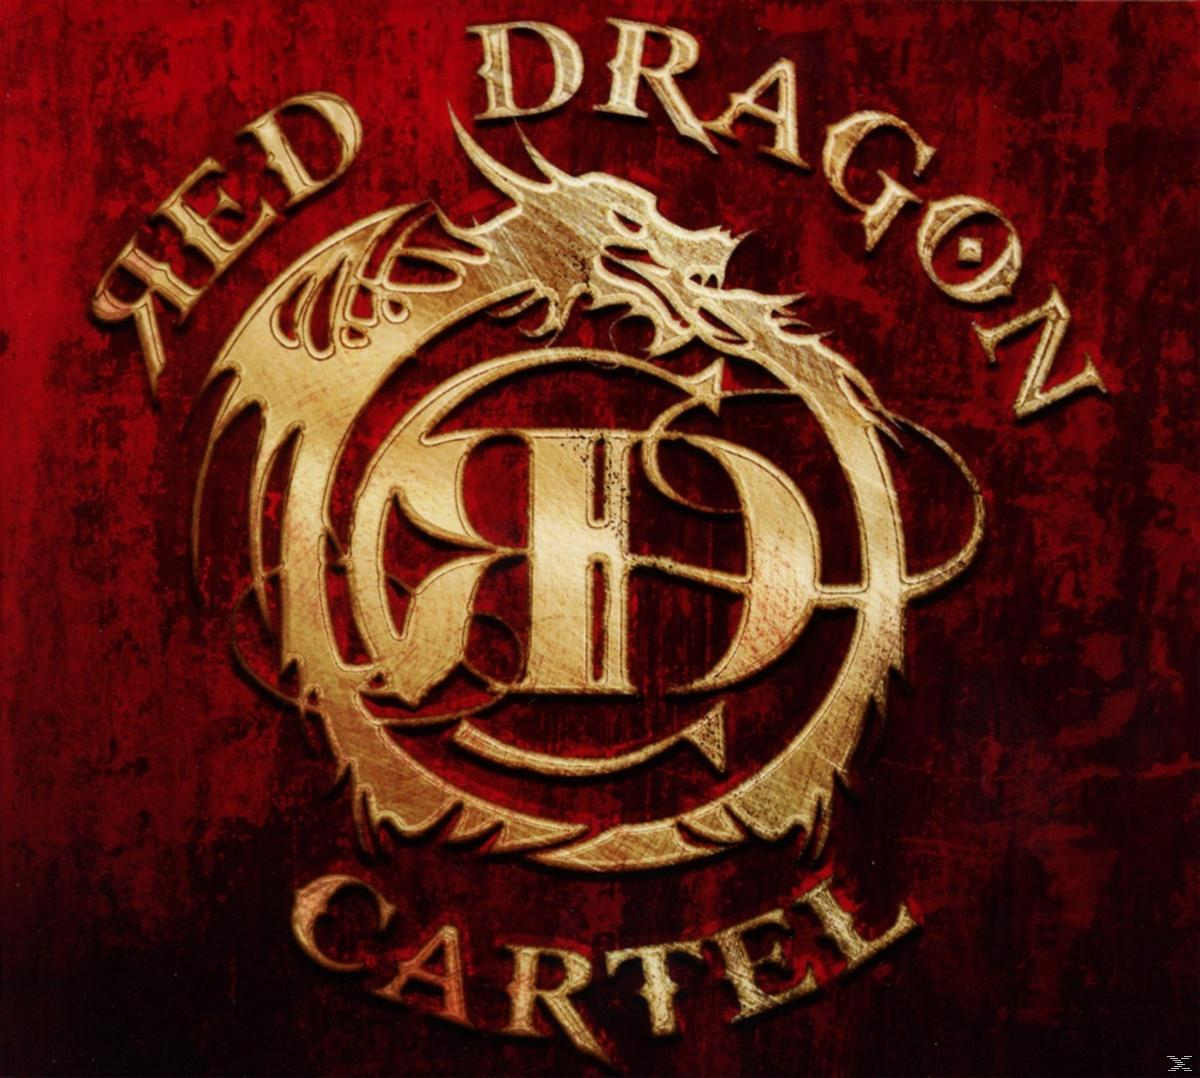 (CD) Cartel Red Cartel Dragon Red - - Dragon